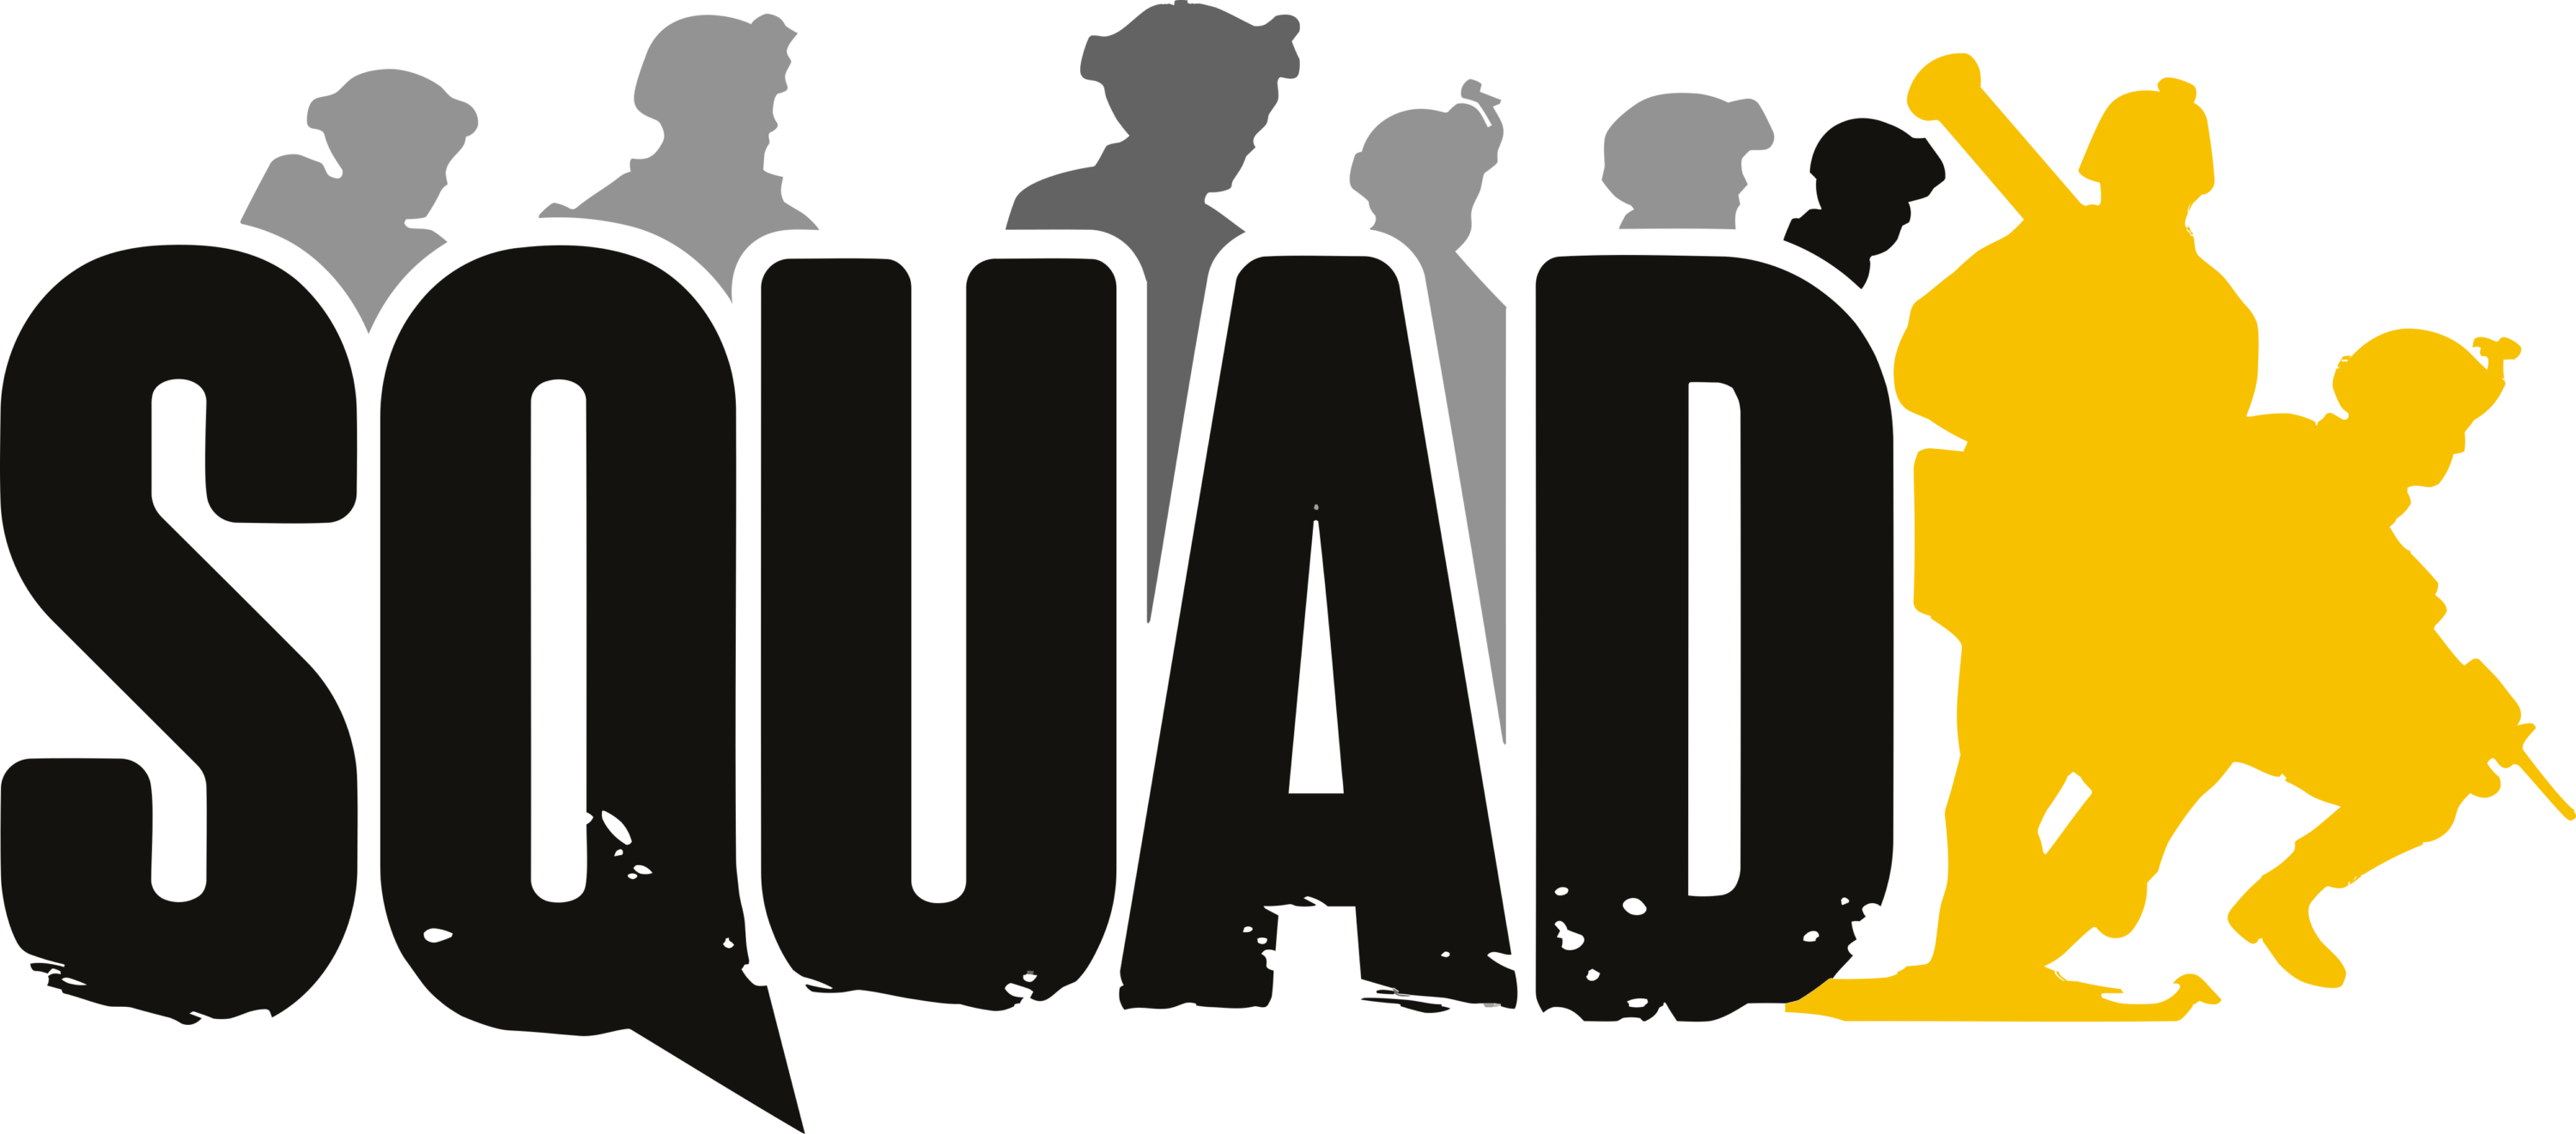 Squad Game Logo